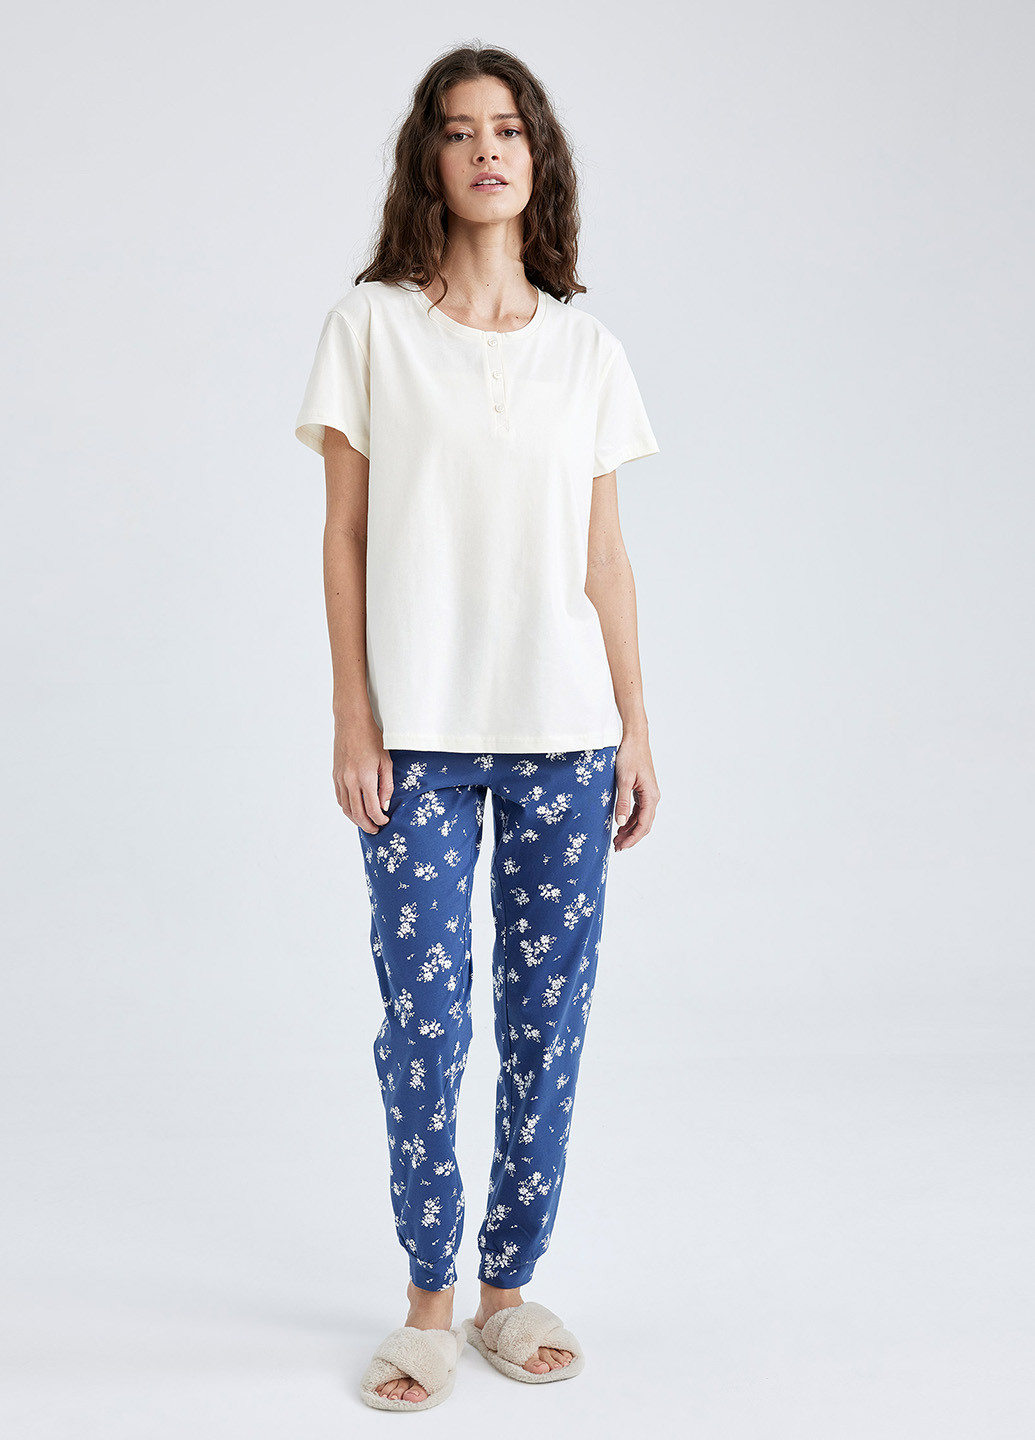 Молочная всесезон пижама (футболка, брюки) футболка + брюки DeFacto